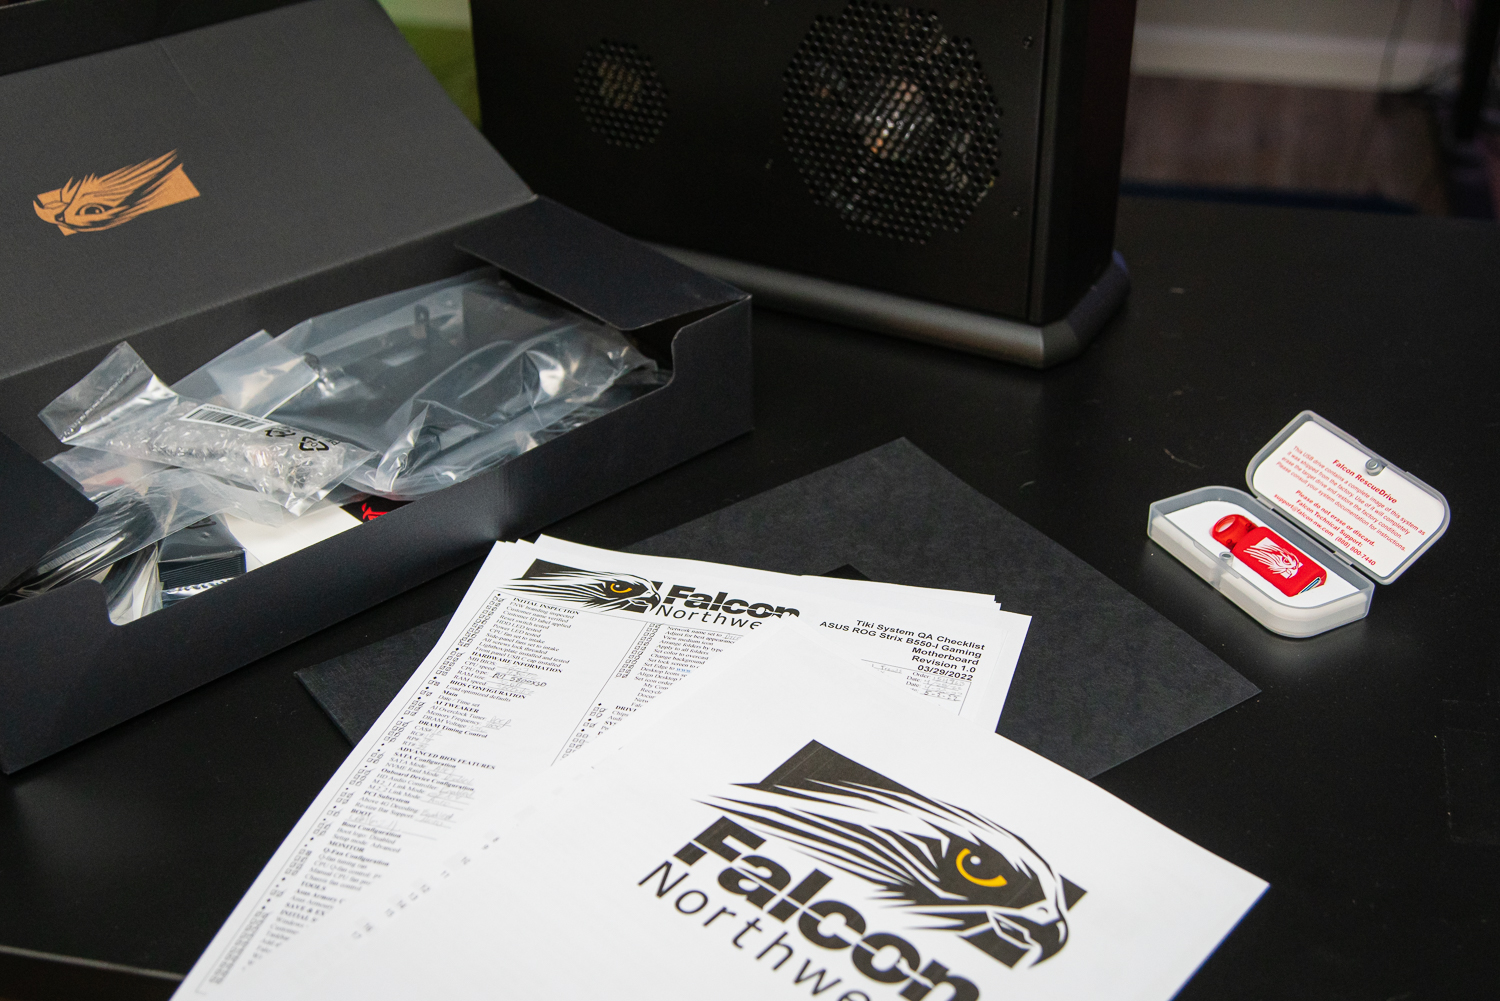 Falcon Northwest Tiki review 2022: Mini PC gaming, perfected